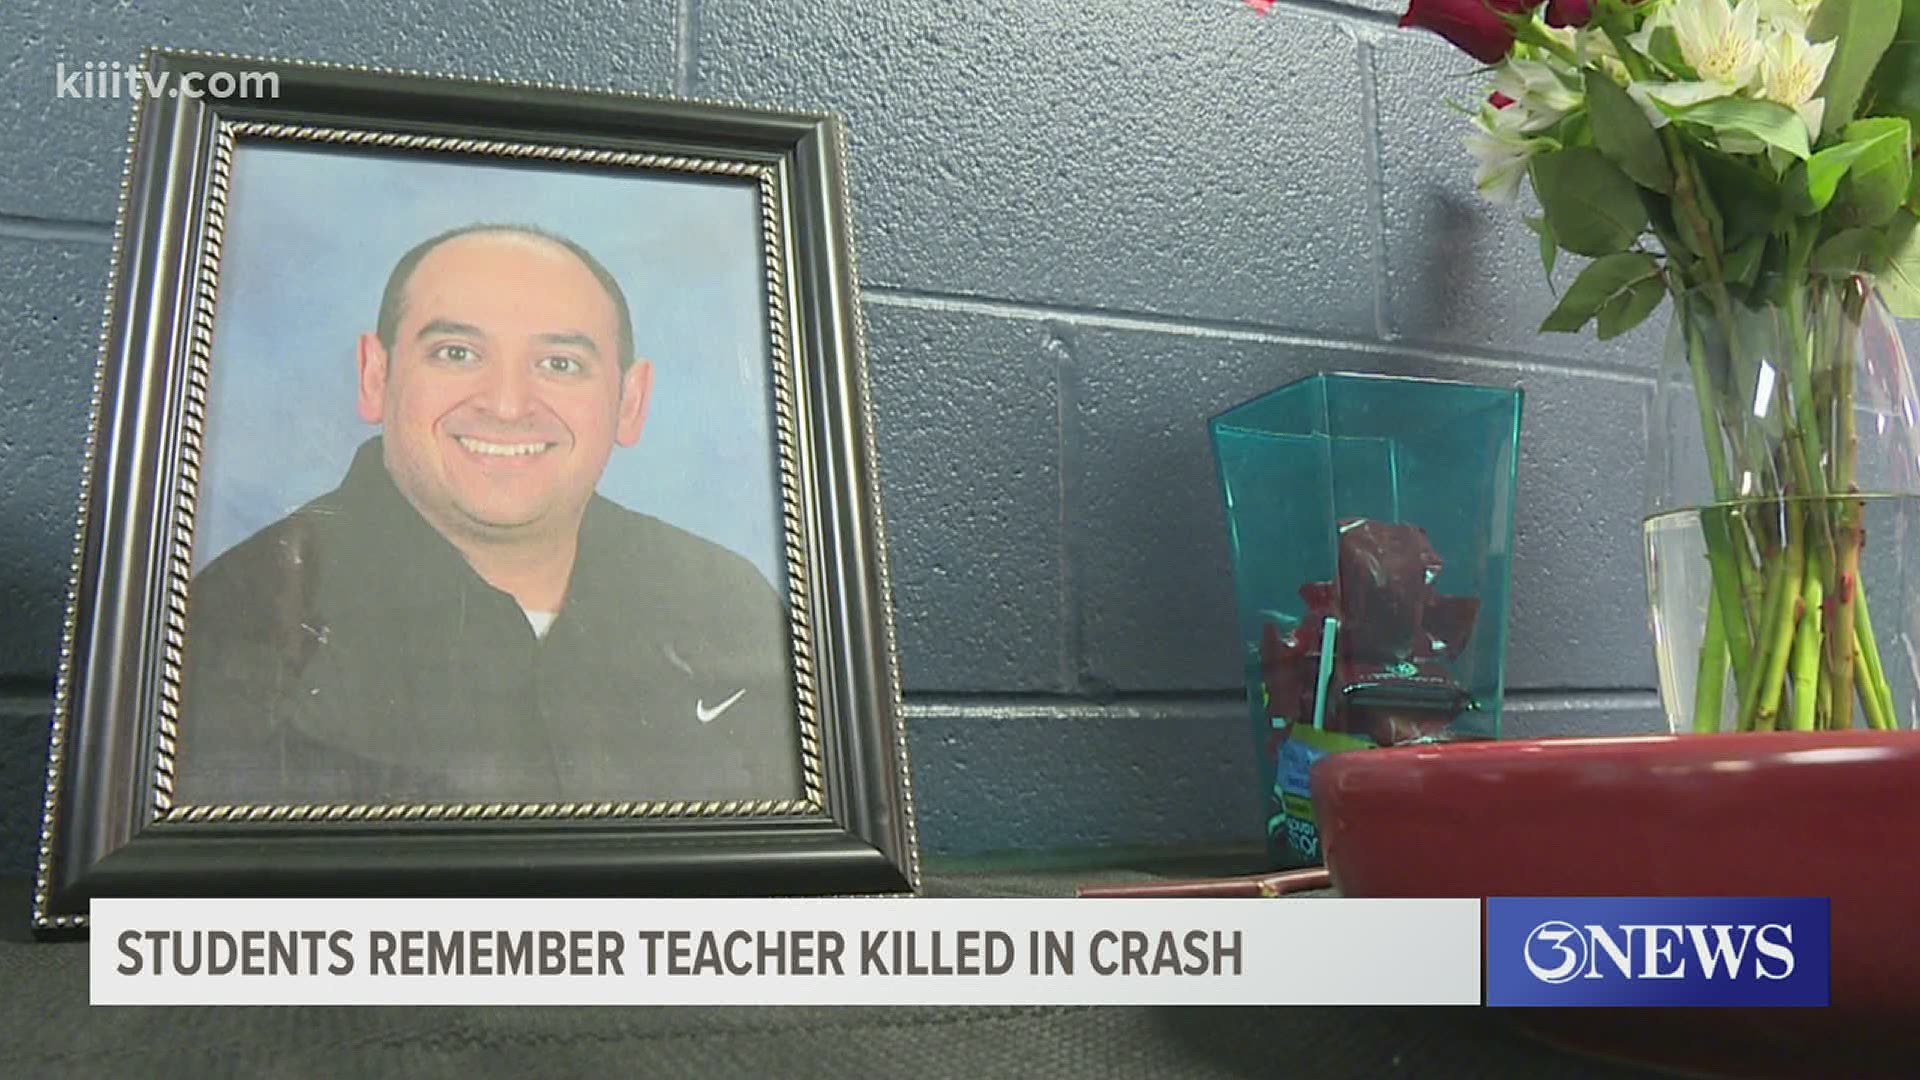 The victim was identified as Richard Luna, a teacher from Dr. M.L. Garza-Gonzalez Charter School.